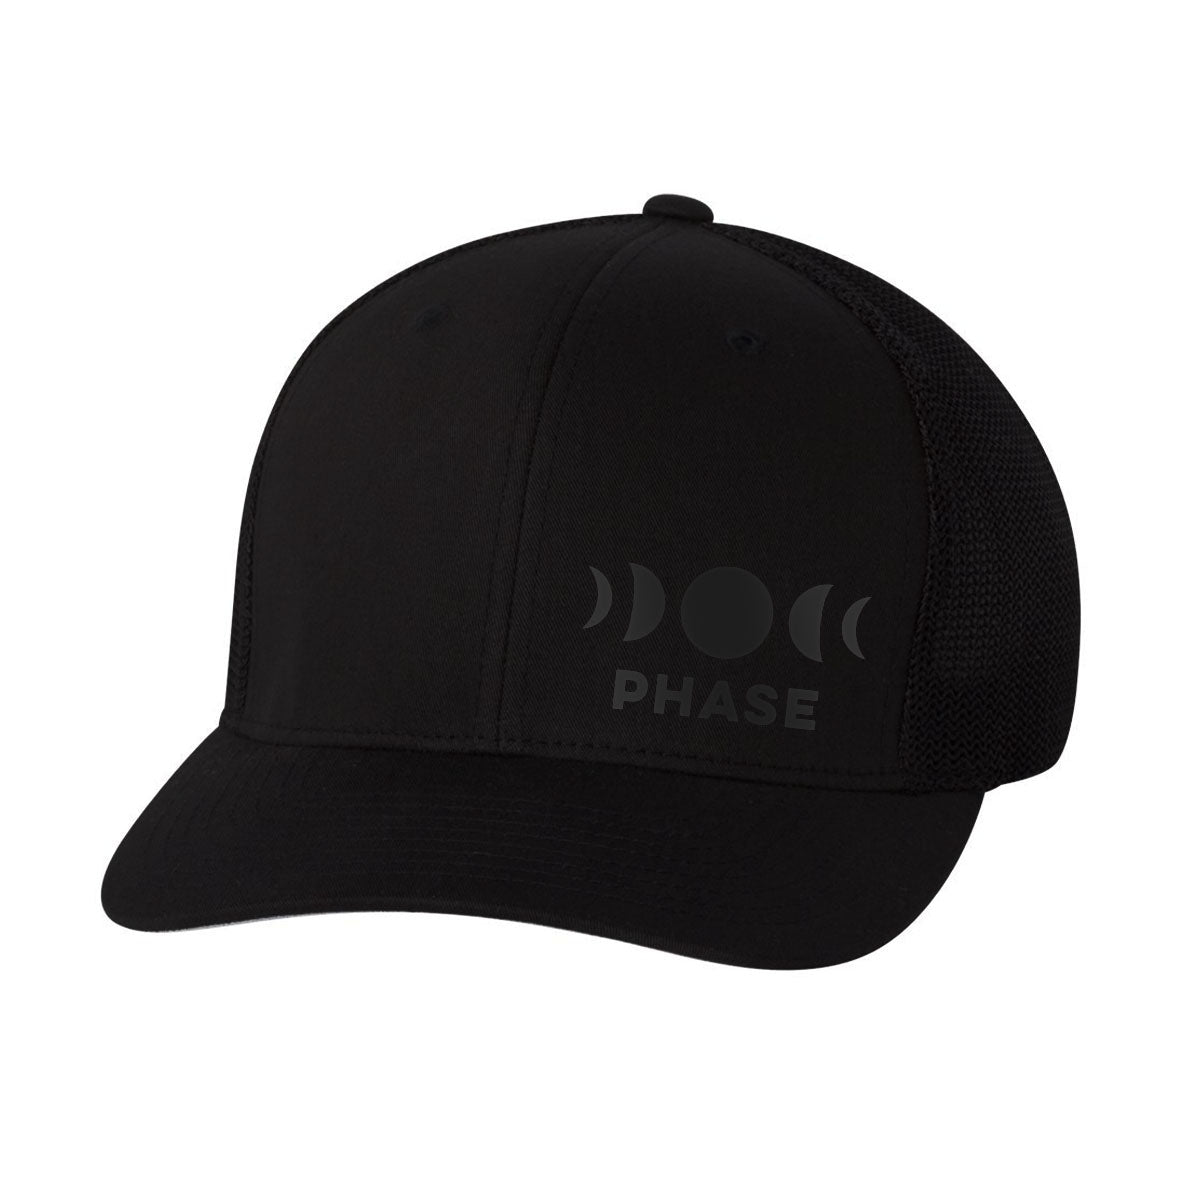 NEW MOON HAT -  Black w Blk foil